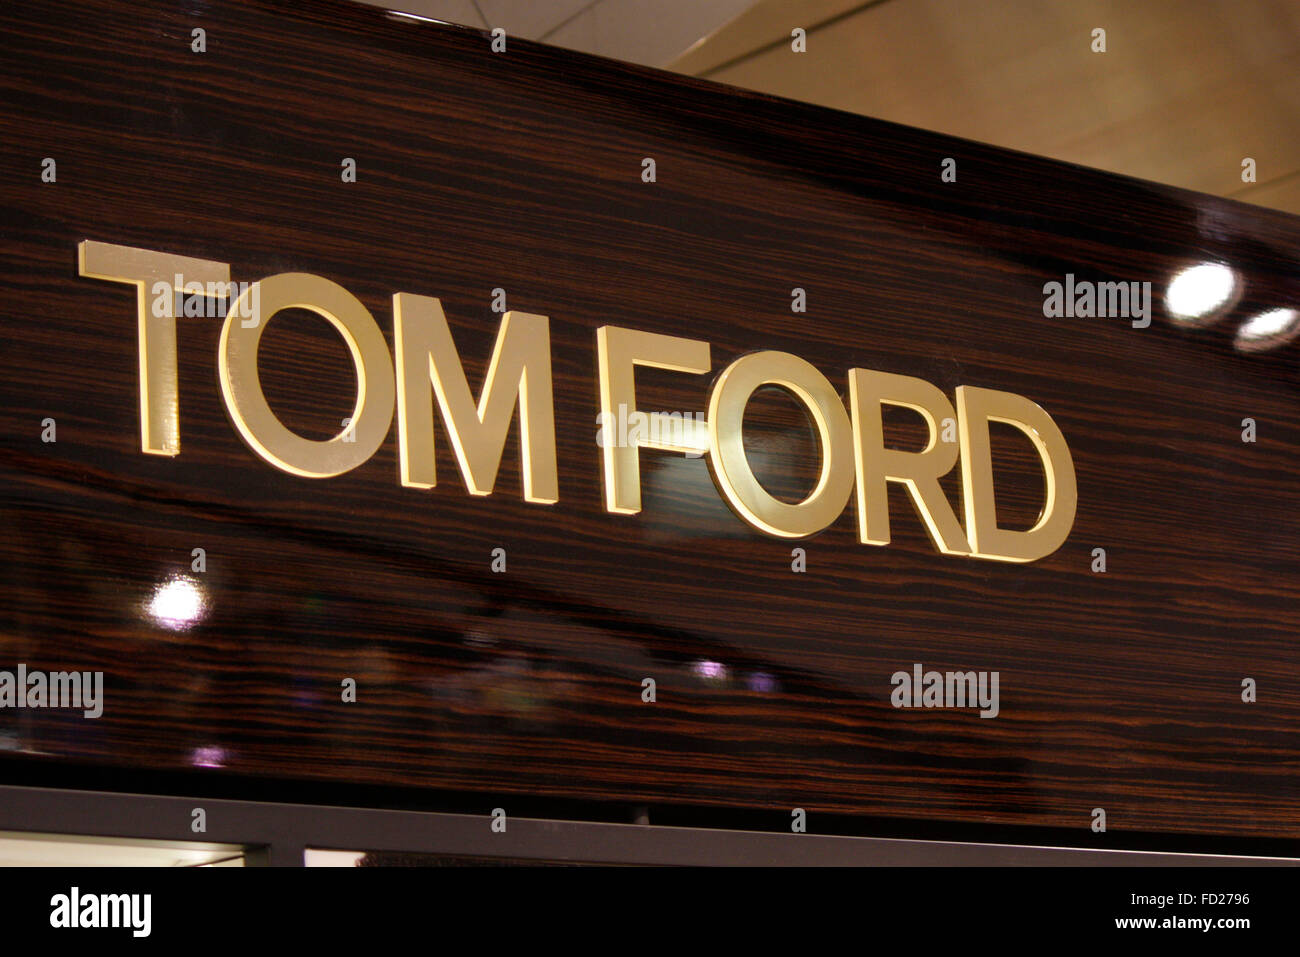 Markenname: "Tom Ford", Berlin. Stockfoto